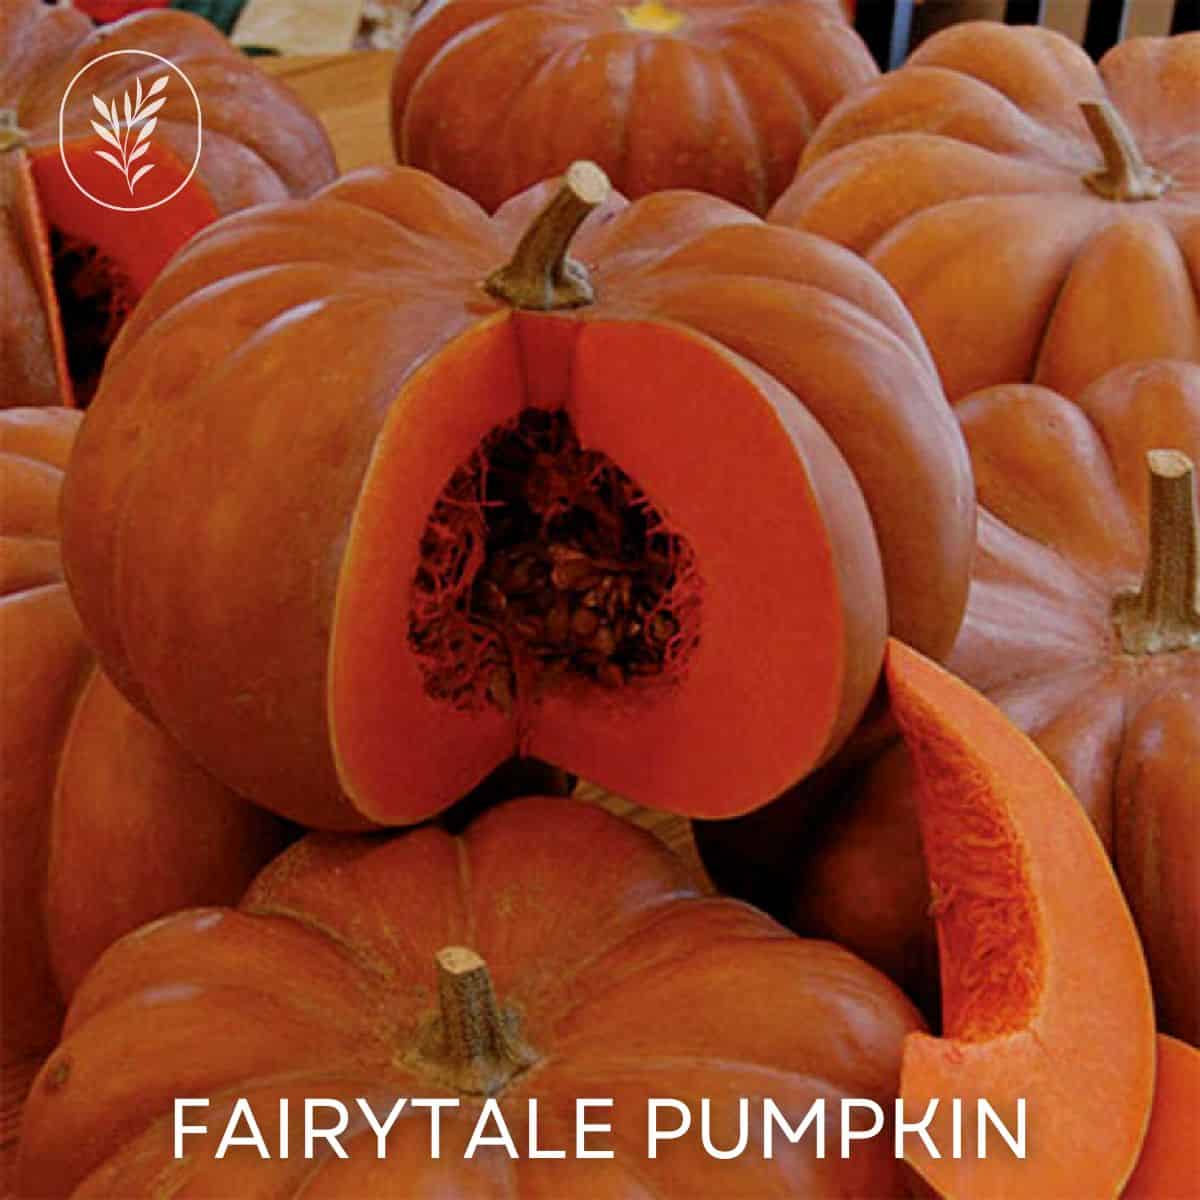 Fairytale pumpkin via @home4theharvest